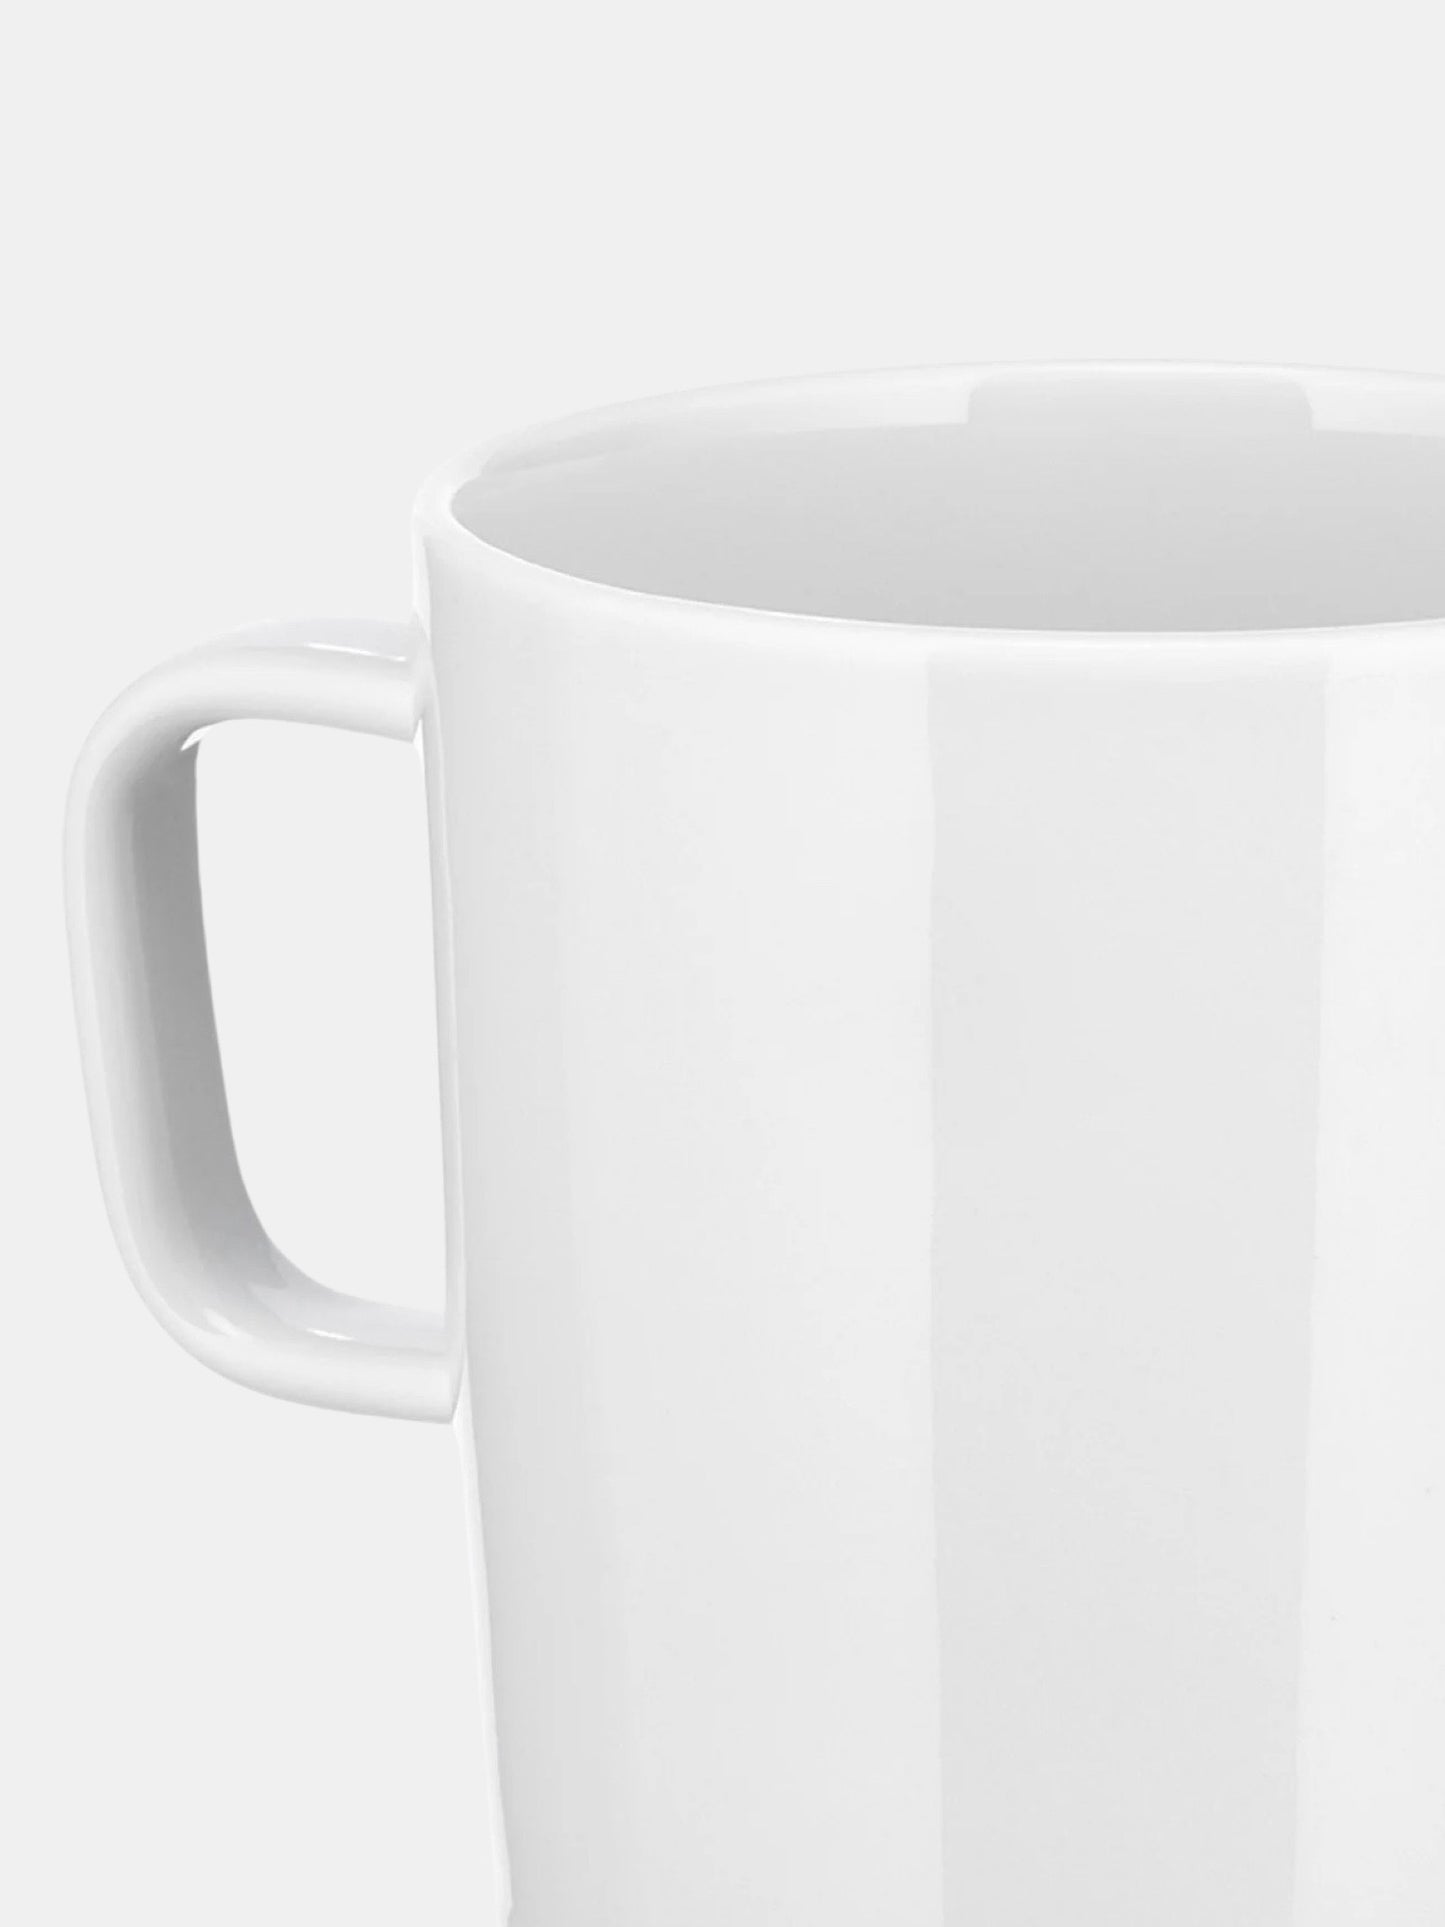 PlateBowlCup Mug, Set of 4 pieces